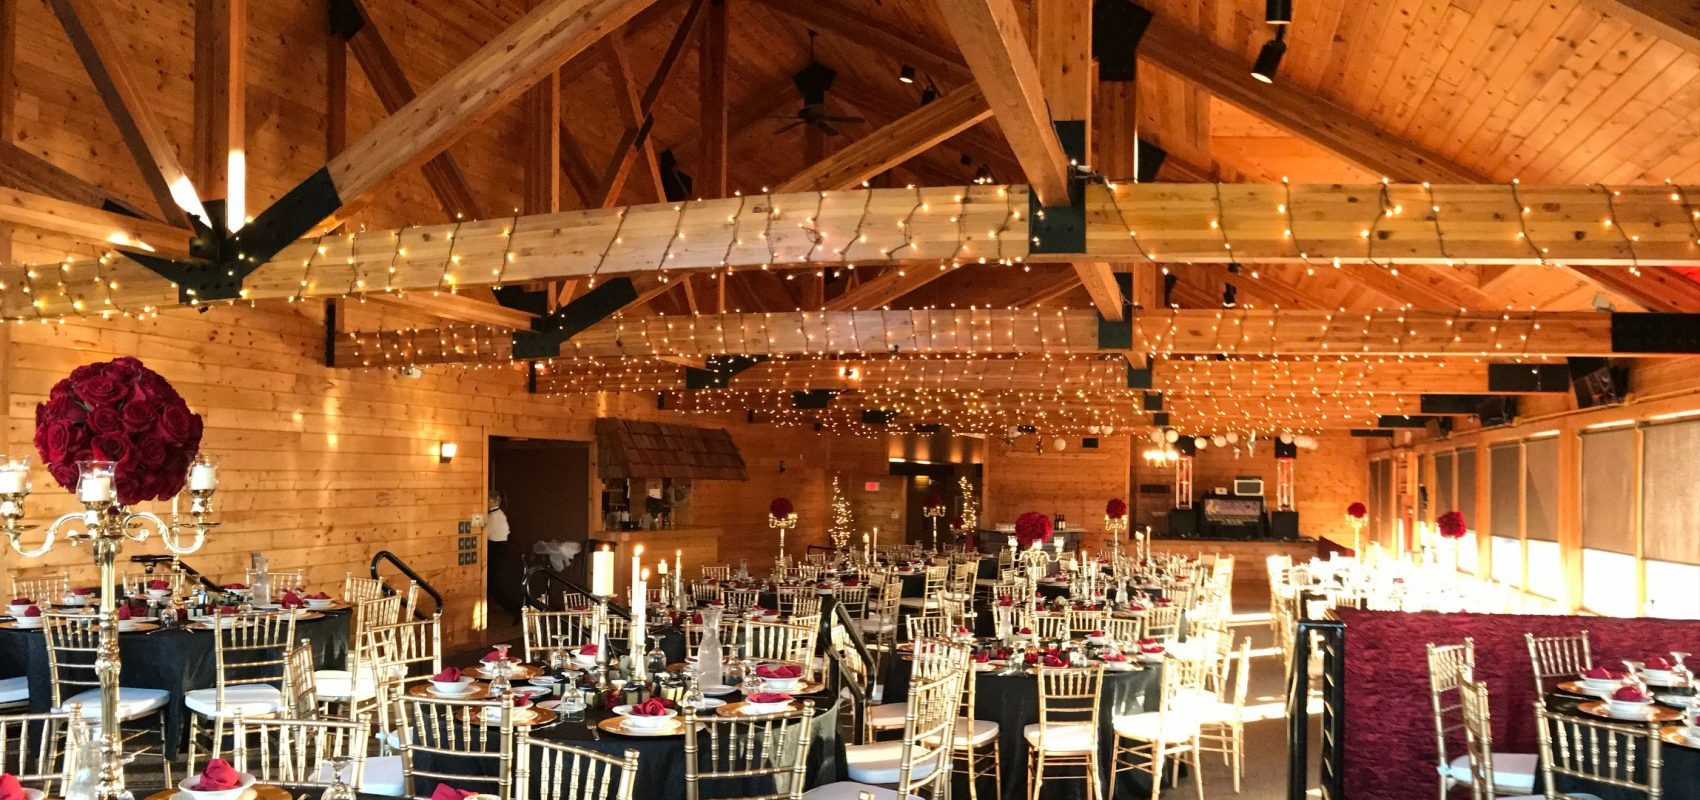 Barn Wedding Venues Michigan
 Michigan barn wedding Myth Wedding Venues Banquets and